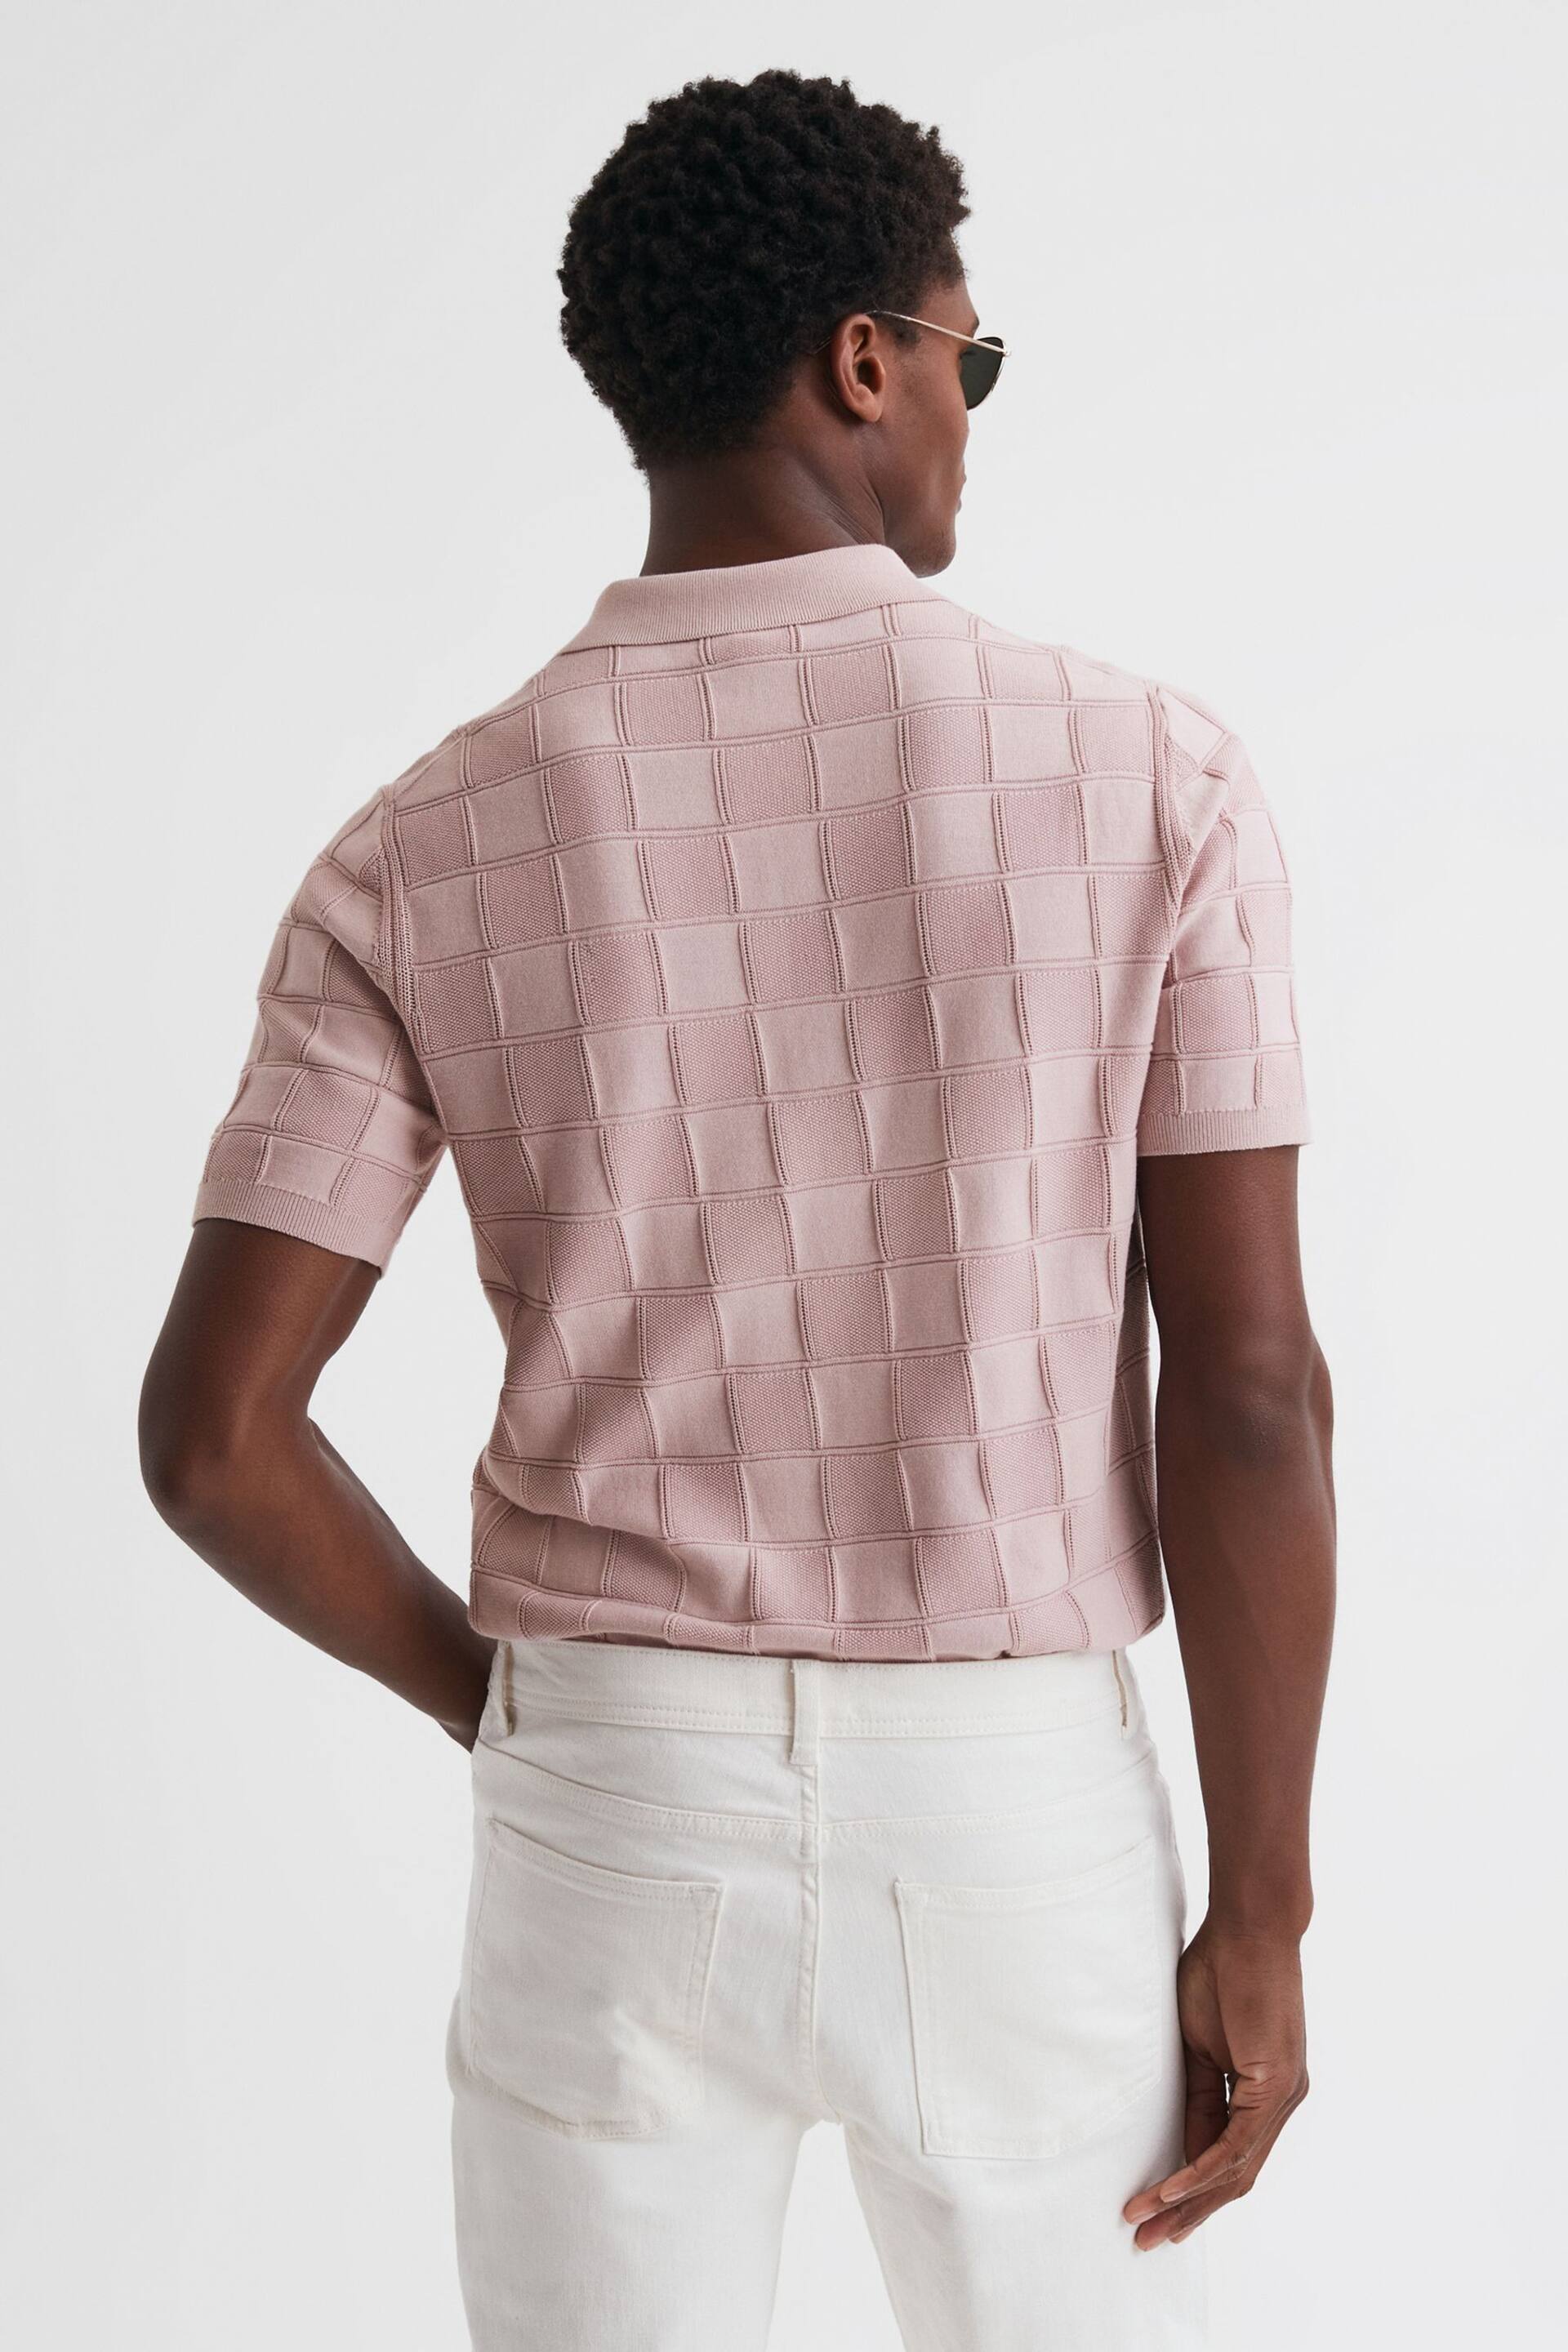 Reiss Soft Pink Blaze Cotton Press-Stud Polo T-Shirt - Image 5 of 5